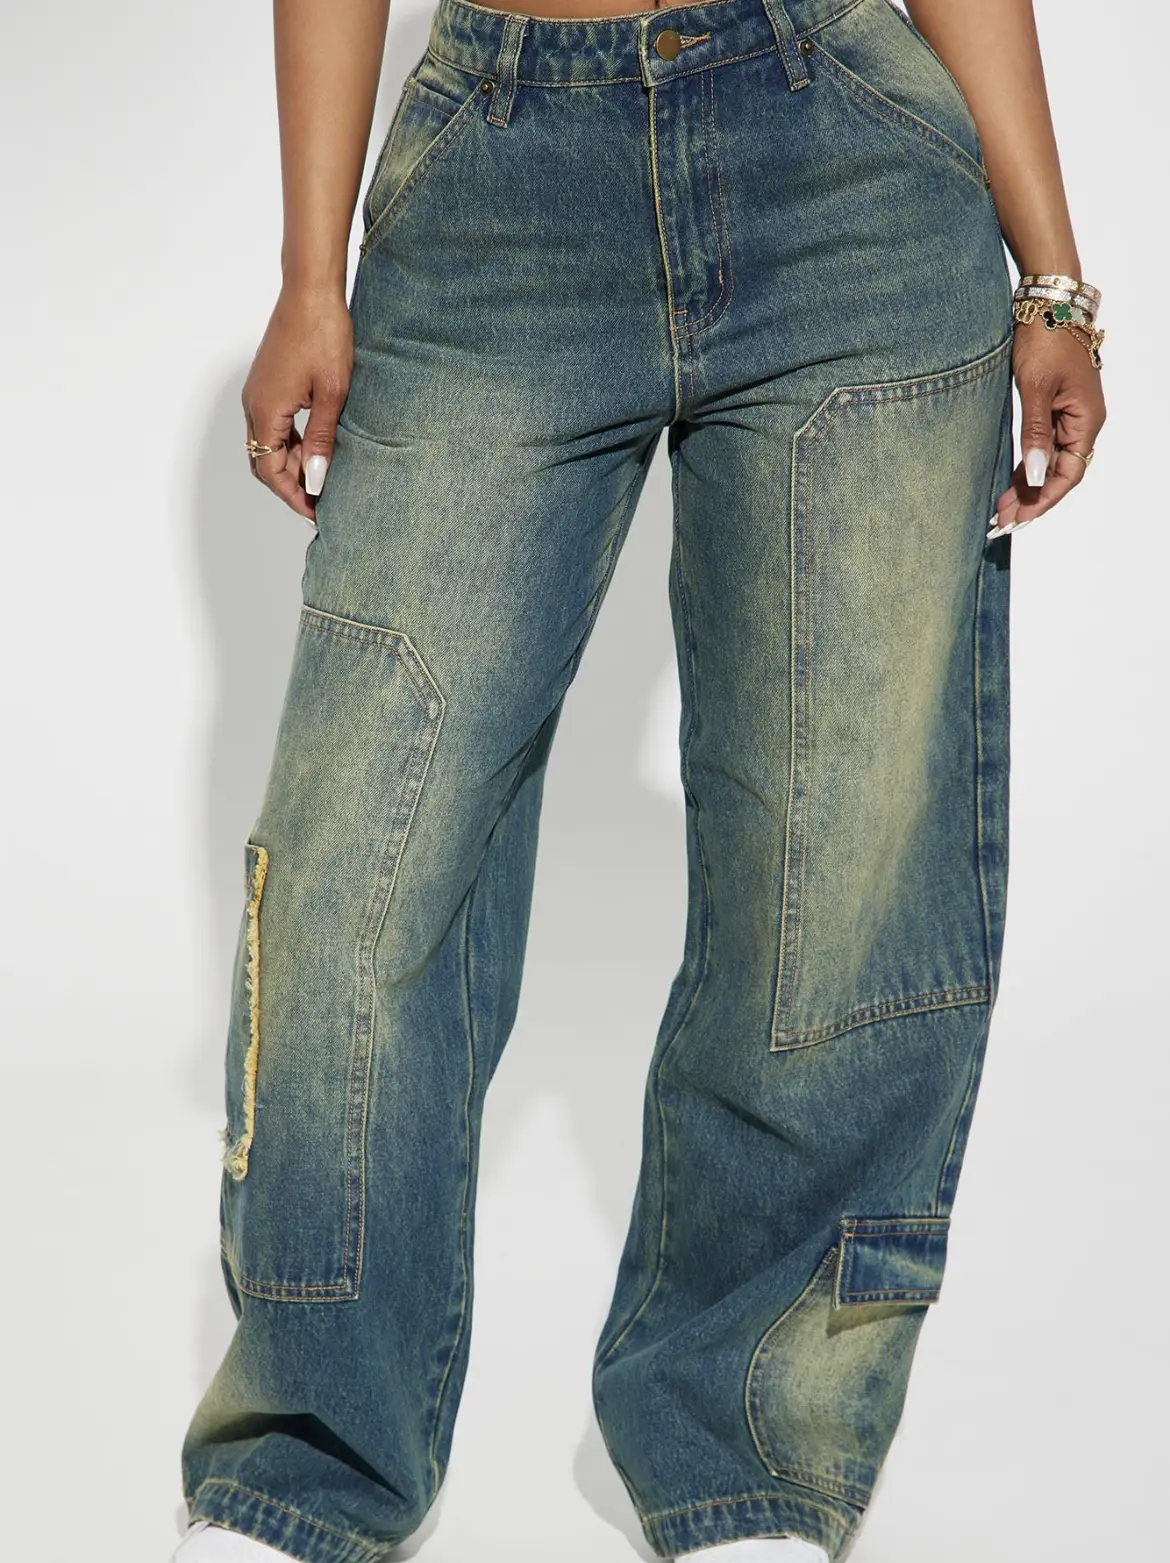 Chelsea Drop Waist Baggy Jeans - Medium Wash, Fashion Nova, Jeans